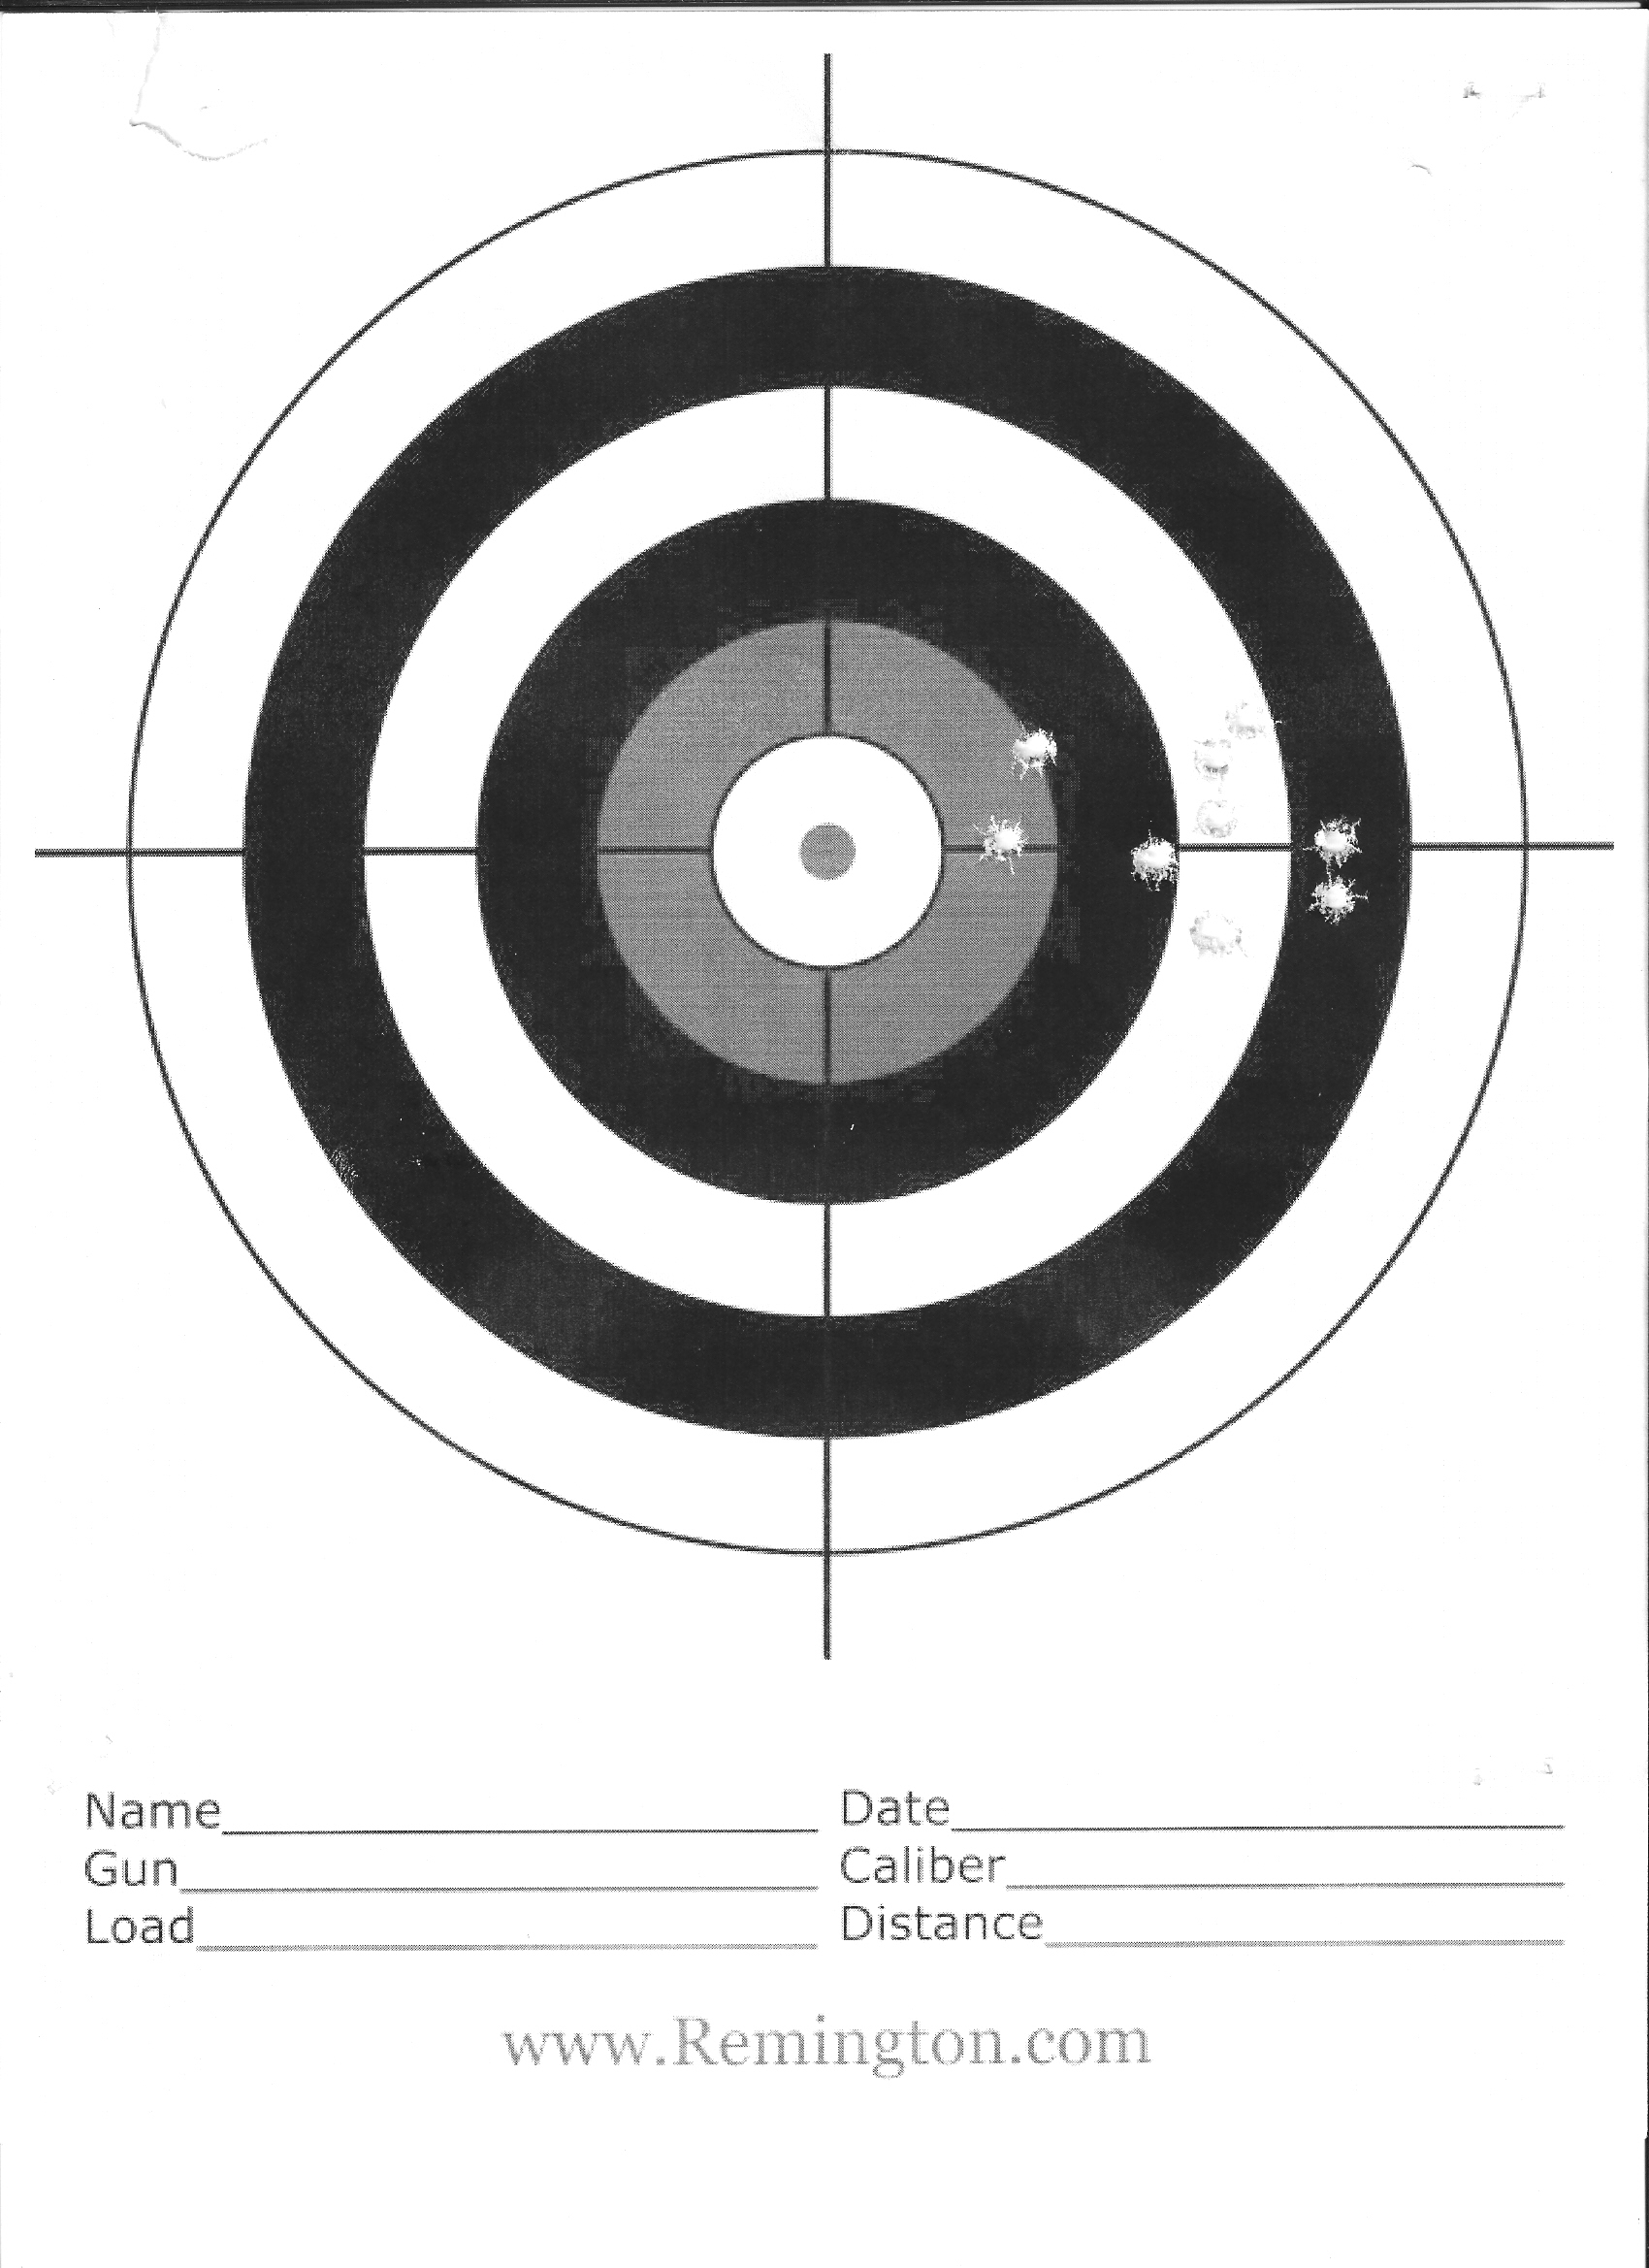 Gunsnet rimfire carbine target